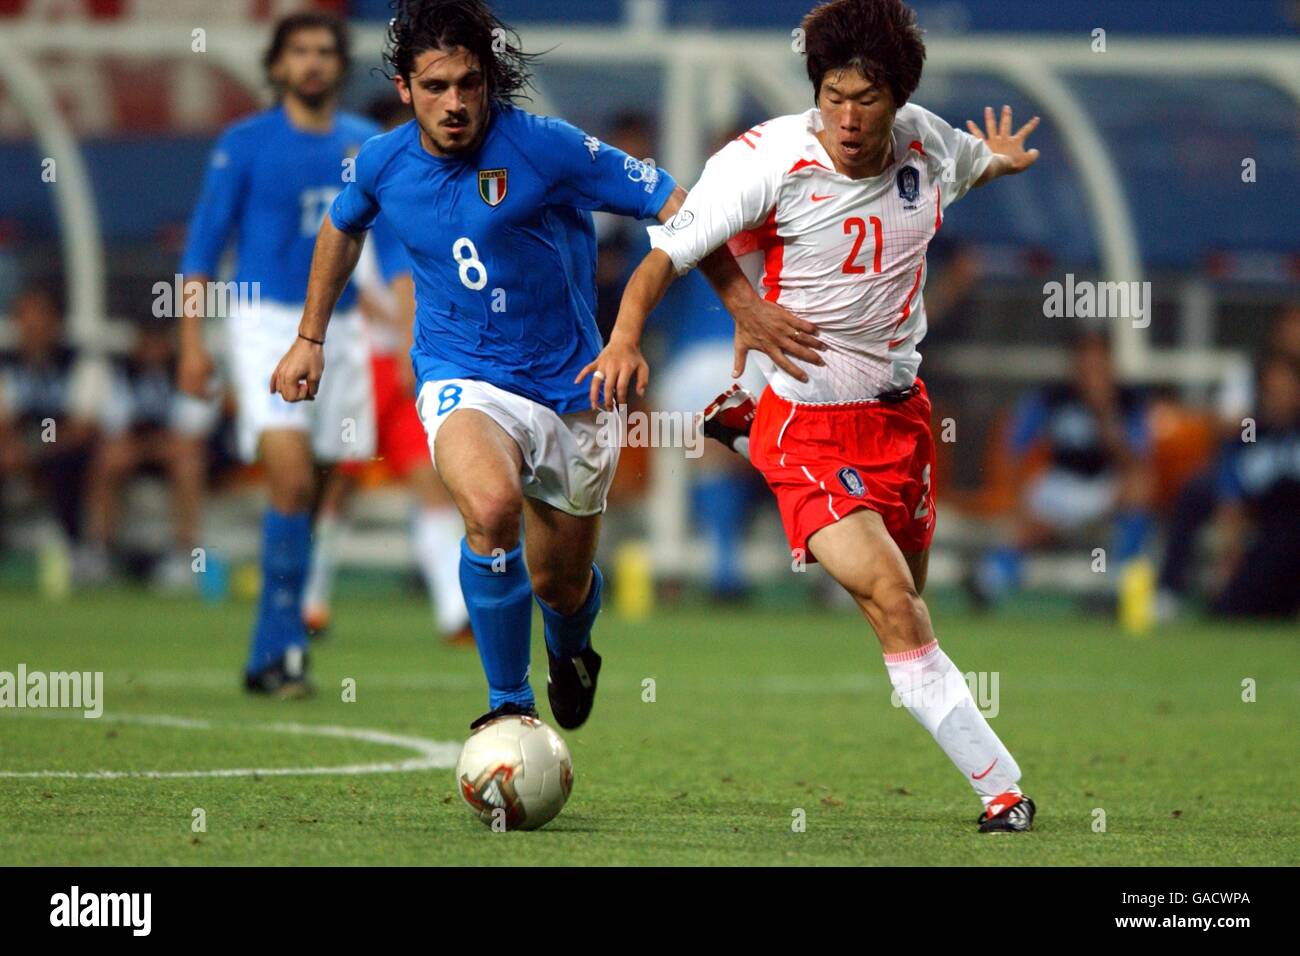 (L-R) Italy's Gennaro Guttuso Korea's Sung Ji Park battle for the ball. Stock Photo